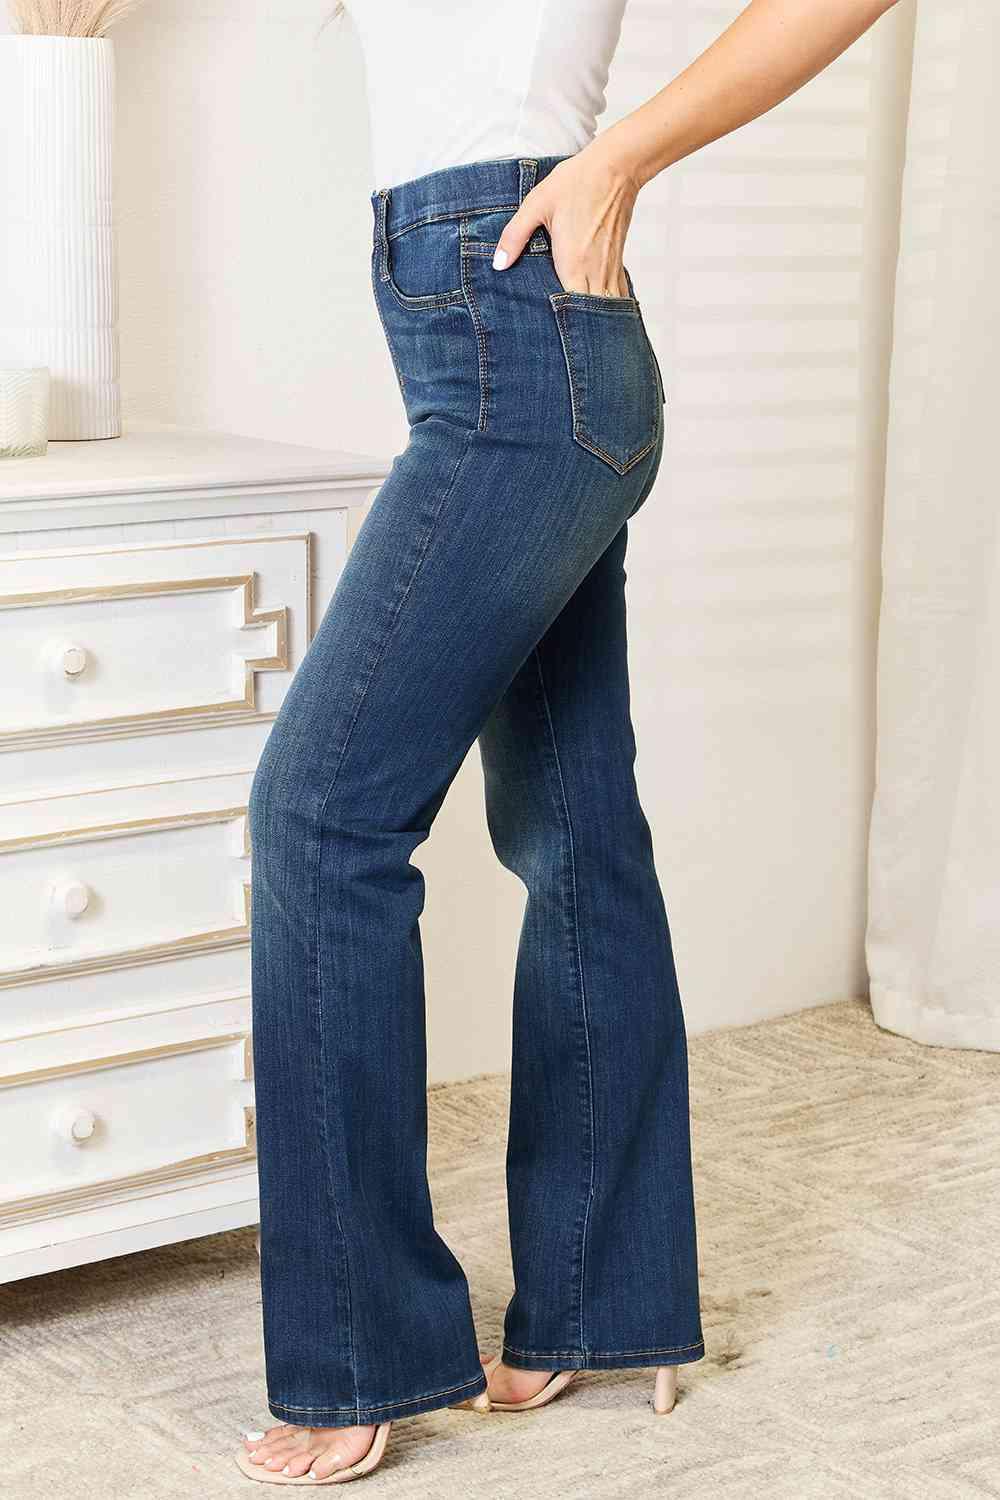 Bona Fide Fashion - Full Size Elastic Waistband Slim Bootcut Jeans - Women Fashion - Bona Fide Fashion